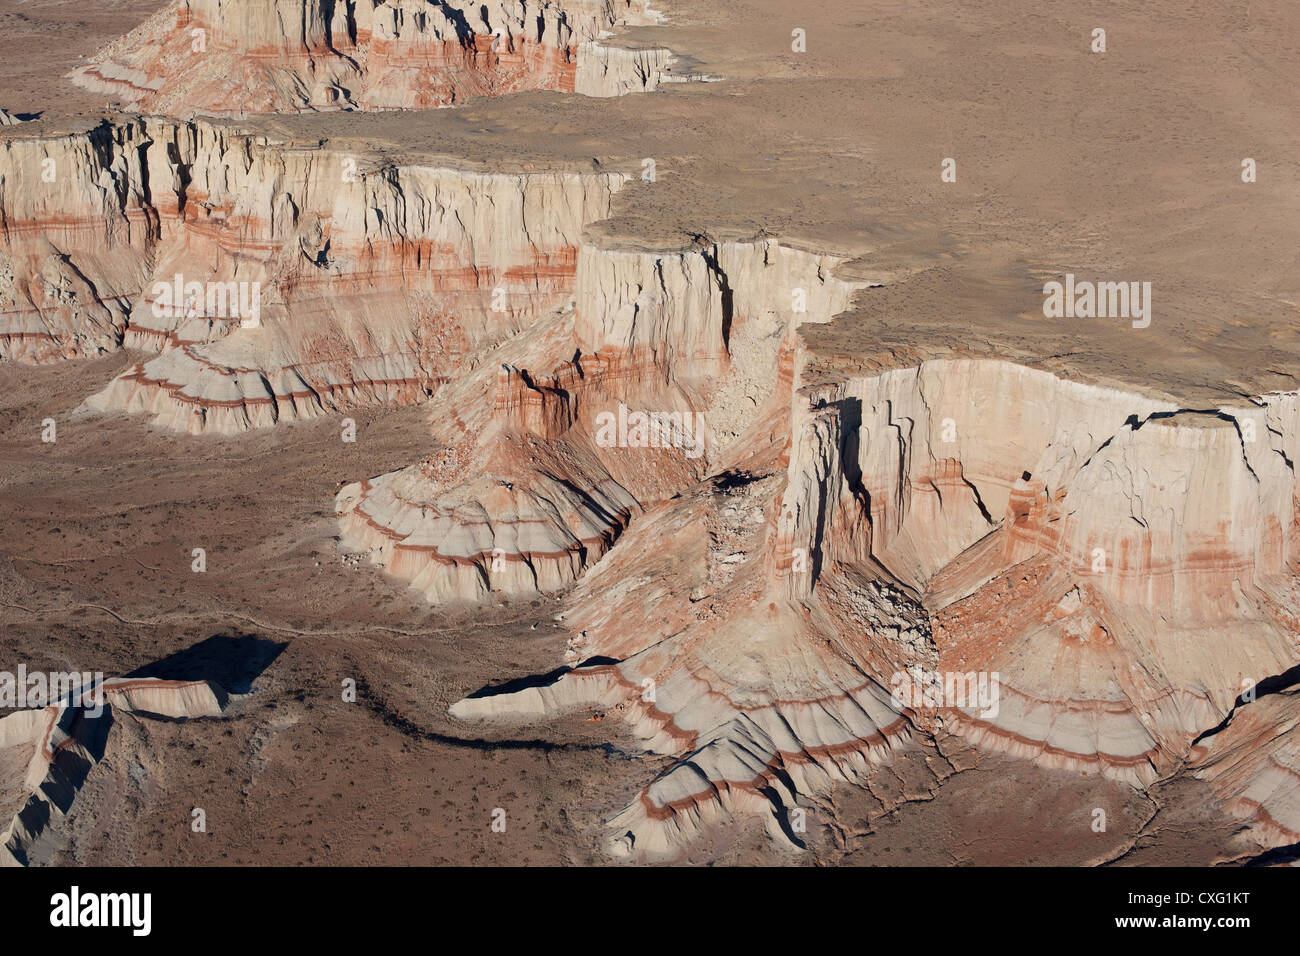 LUFTAUFNAHME. Hoch aufragende Klippen in der Moenkopi-Hochebene. Coal Mine Canyon, Navajo and Hopi Lands, Coconino County, Arizona, USA. Stockfoto